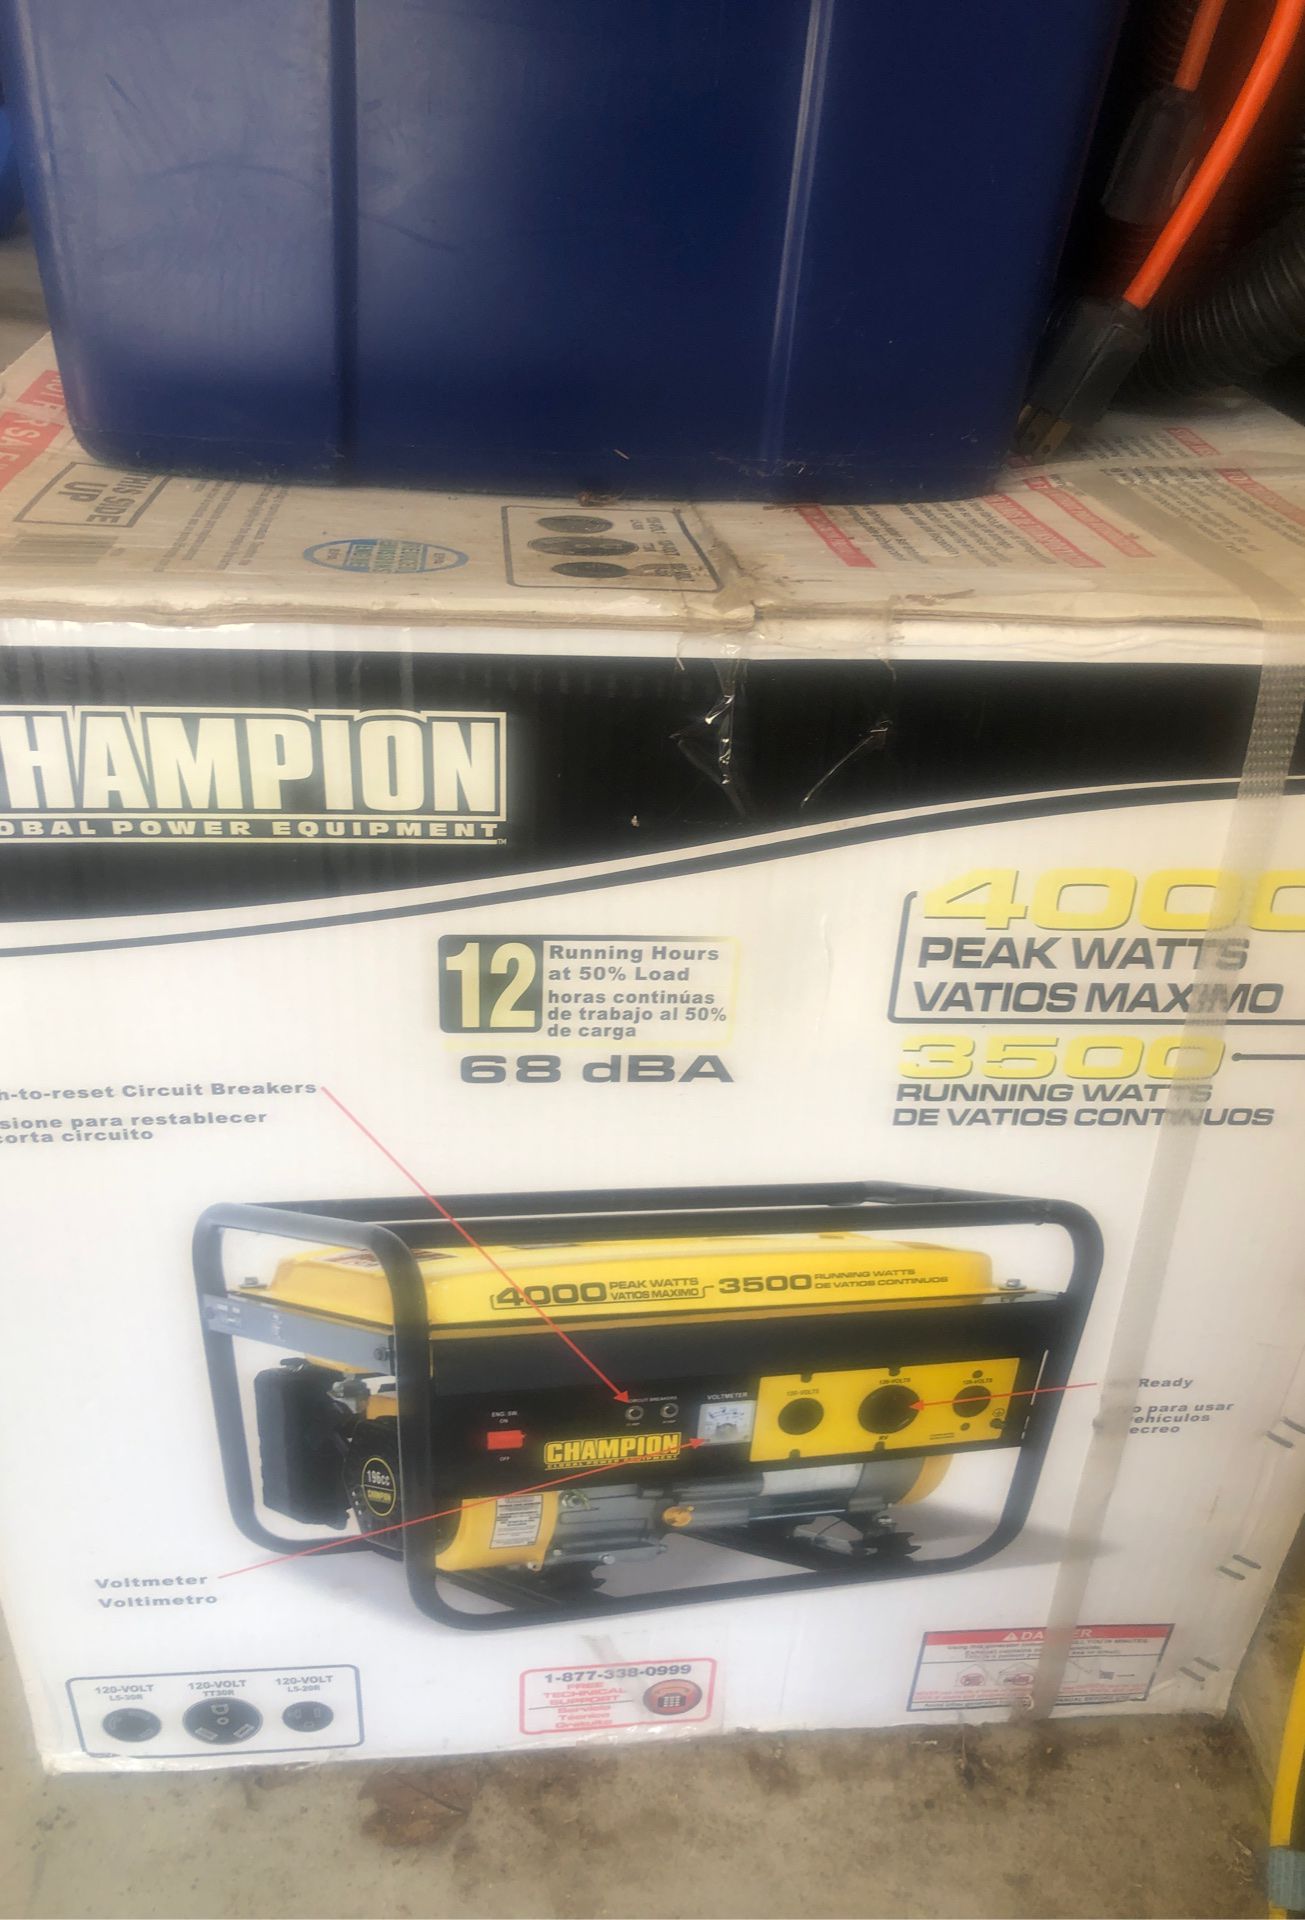 4000 Peak Watts Champion Generator RV Ready- Brand New in Box